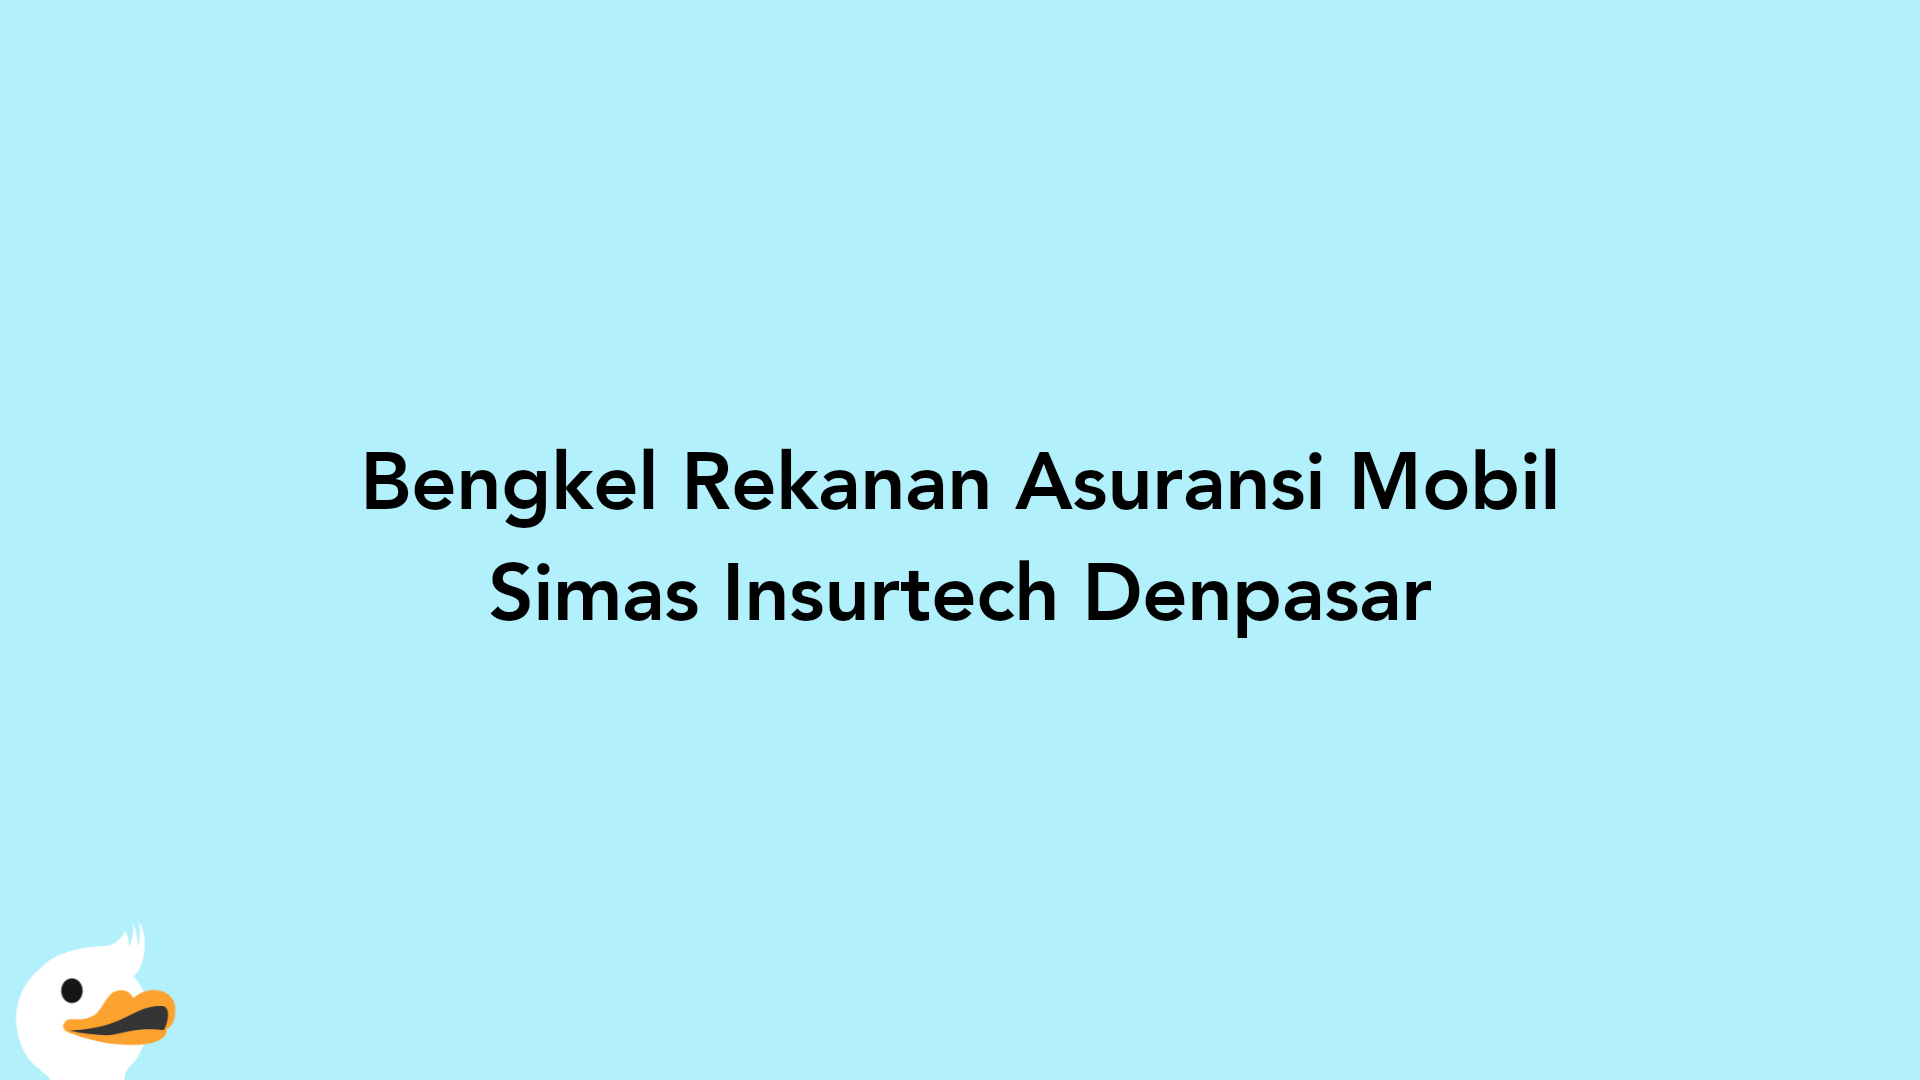 Bengkel Rekanan Asuransi Mobil Simas Insurtech Denpasar